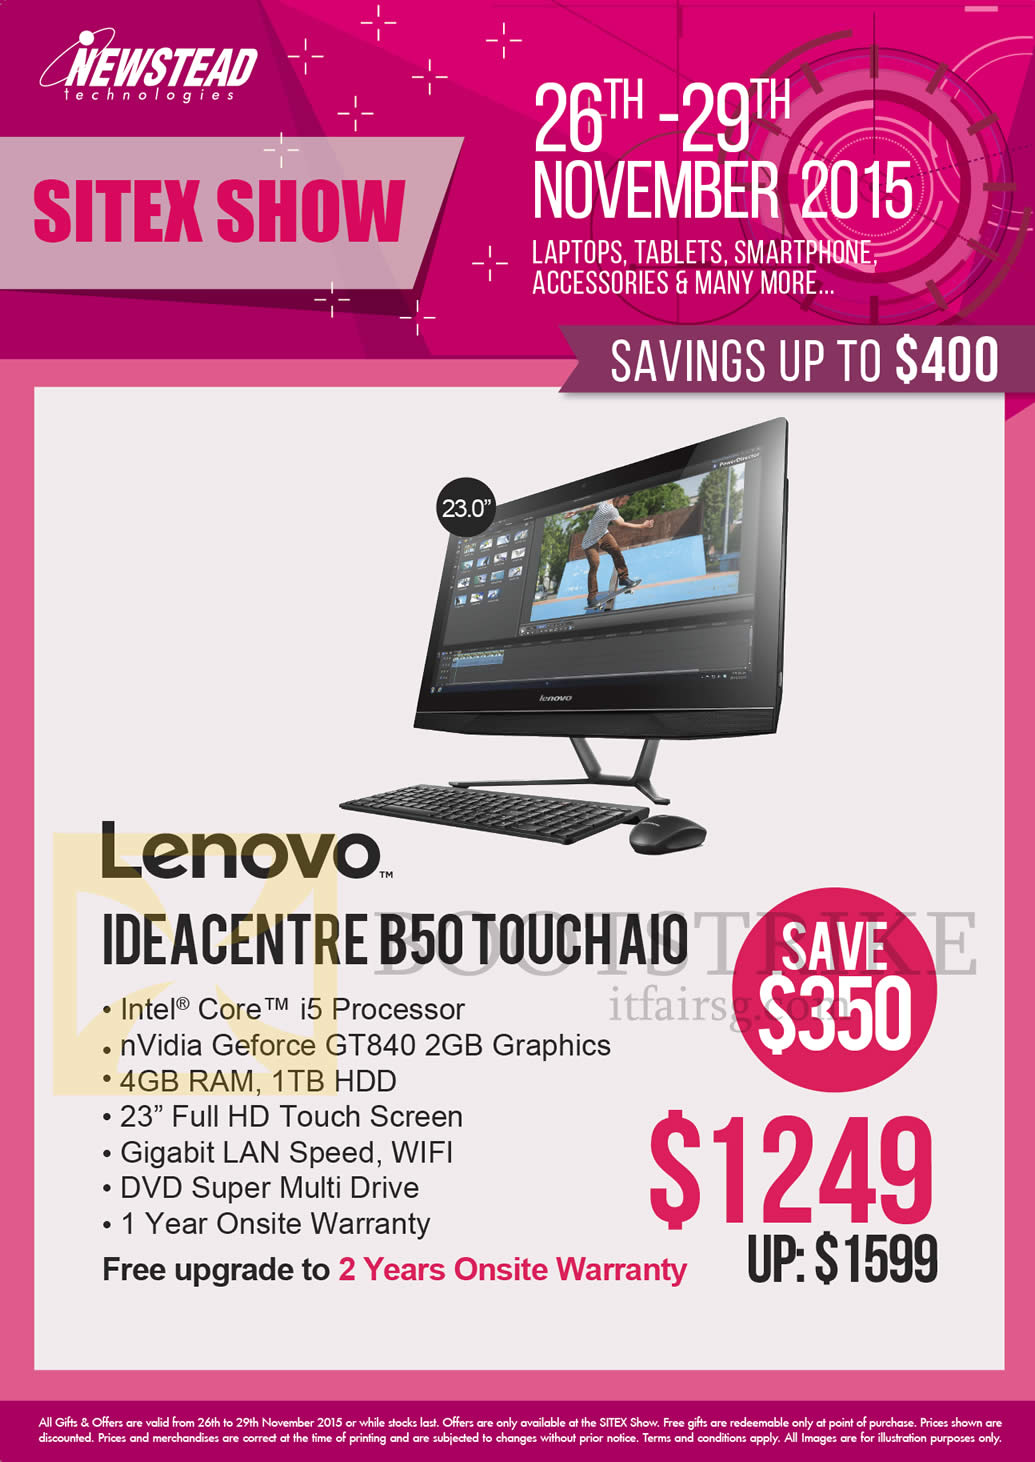 SITEX 2015 price list image brochure of Lenovo Newstead AIO Desktop PC Ideacentre B50 Touch